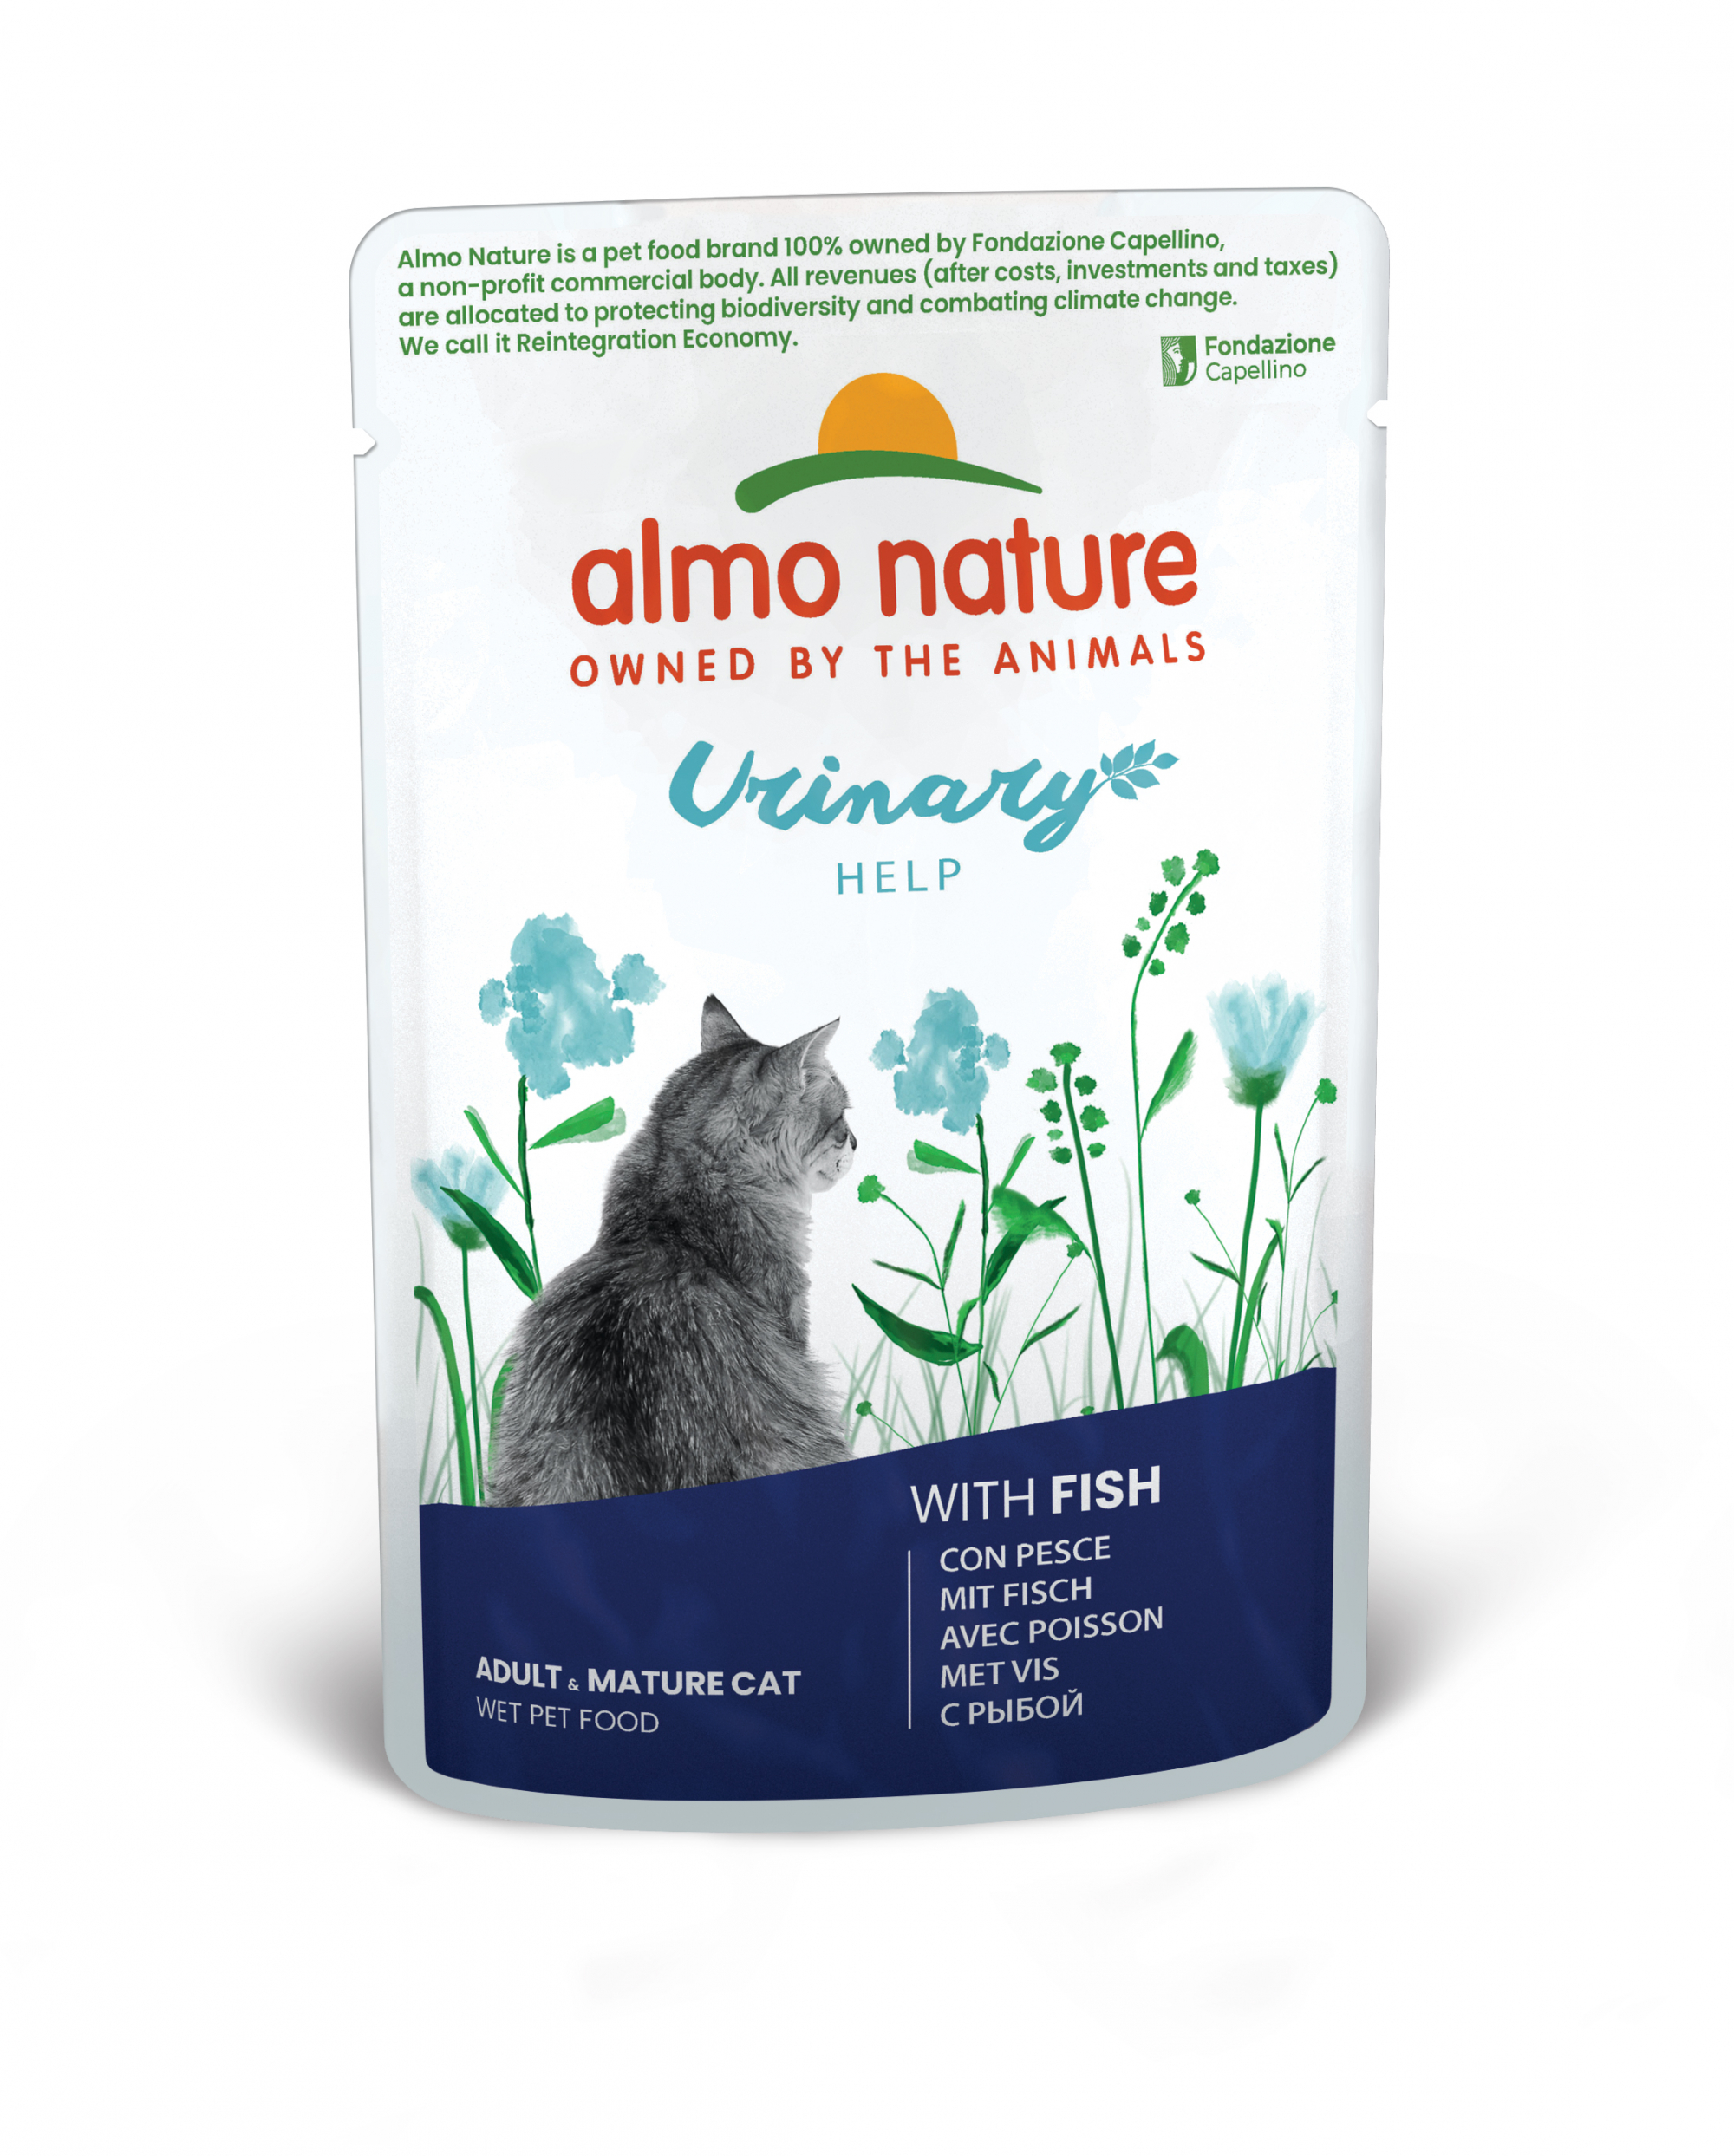 Comida húmeda ALMO NATURE PFC Urinary Support para gatos adultos